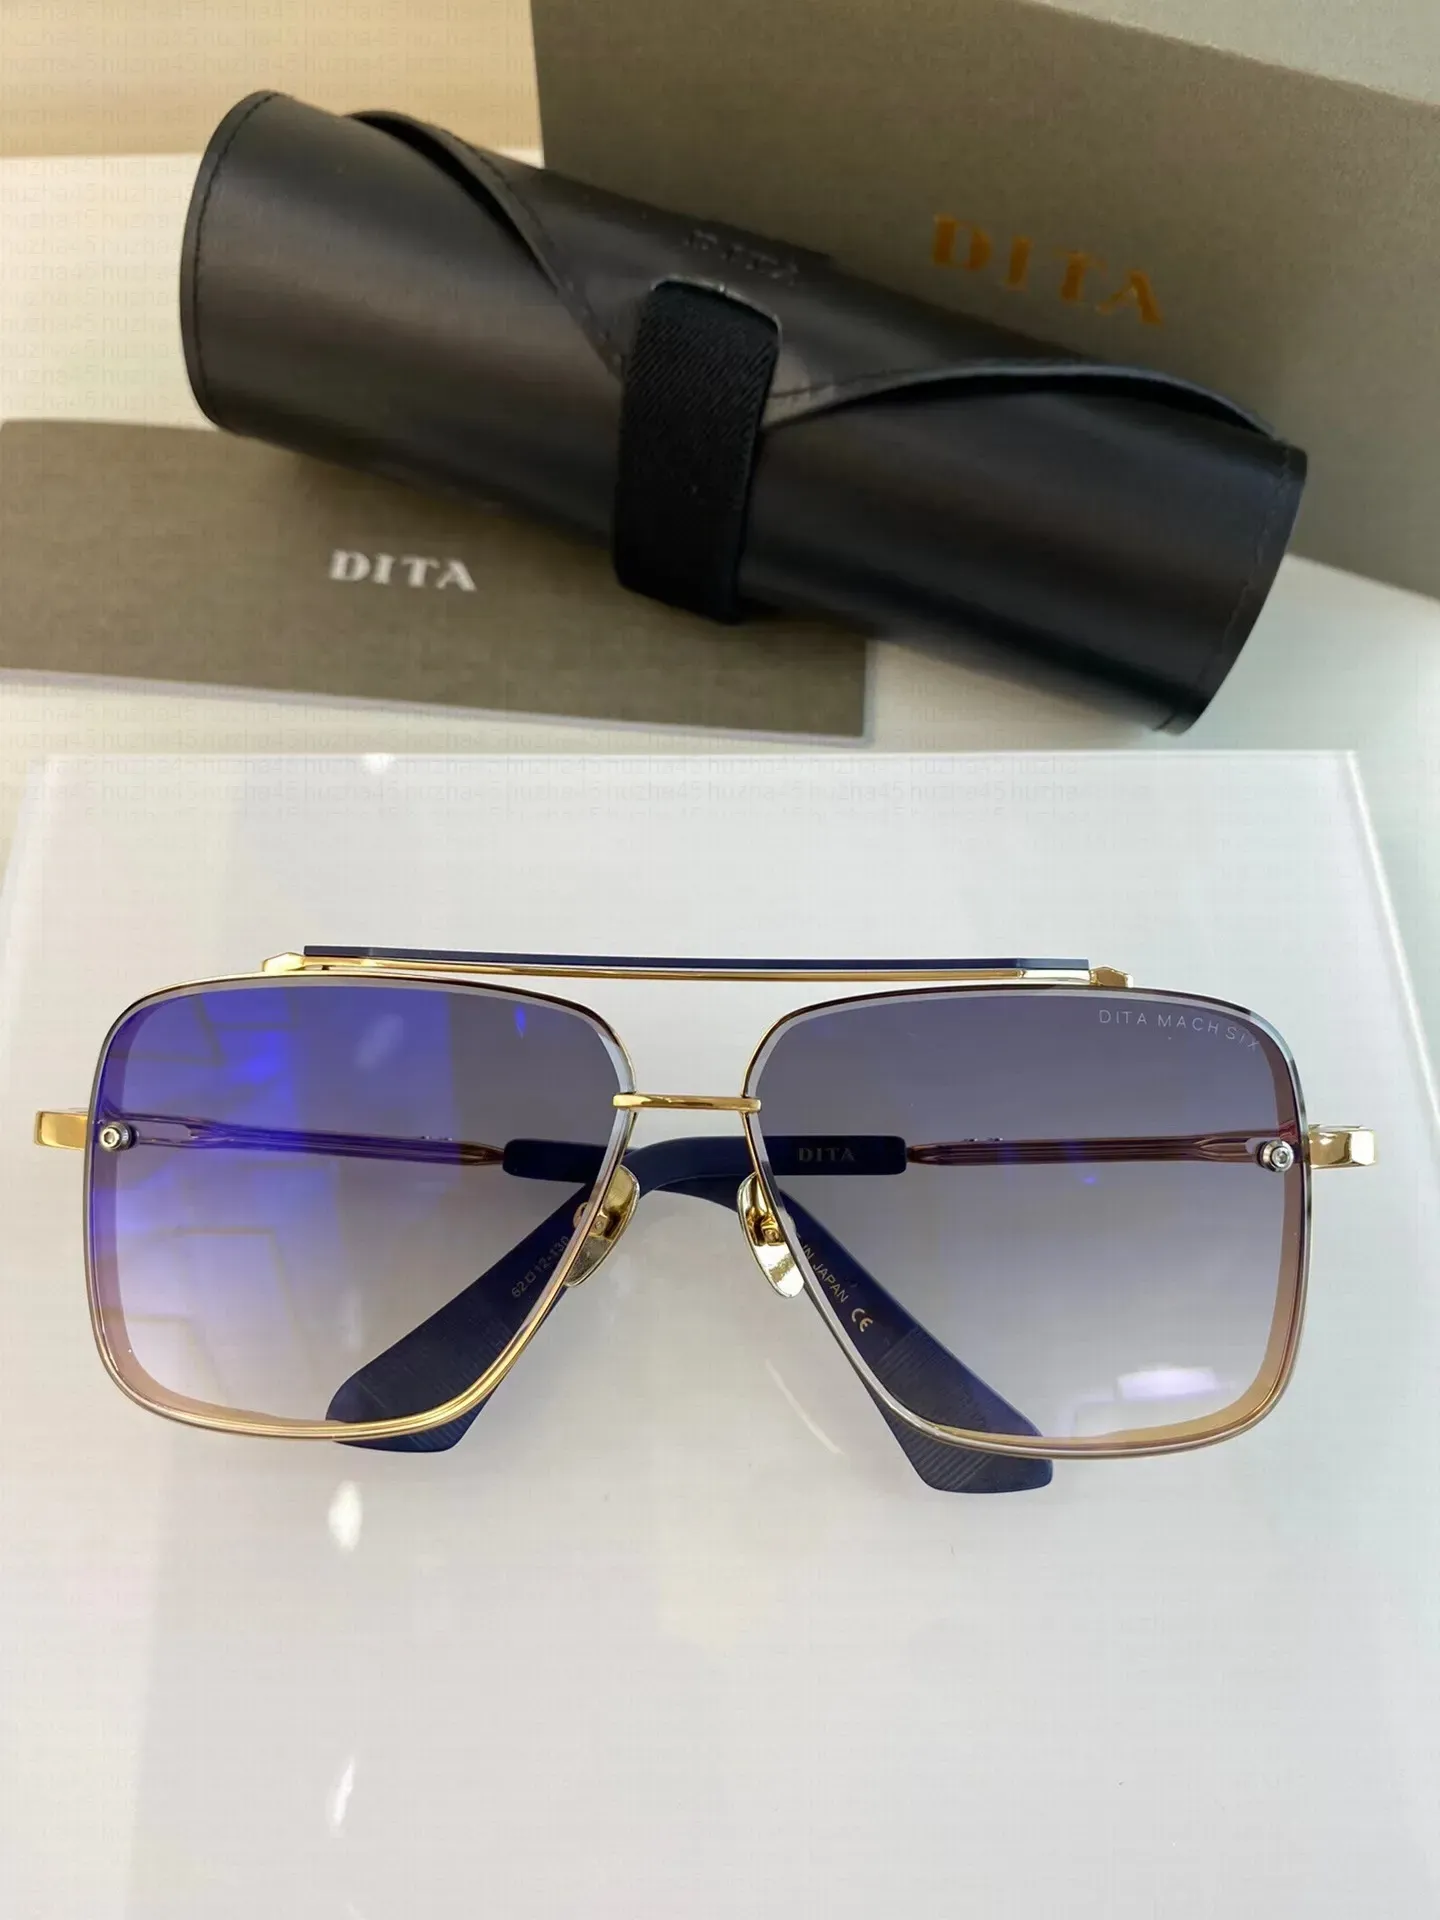 DITA Mach Six Johnson High Quality Designer Men's Sunglasses Fashion Retro Luxury Brand Glasses Fashion Design Metal Ribbon Box Pilot Sports Fitness Supplier Price